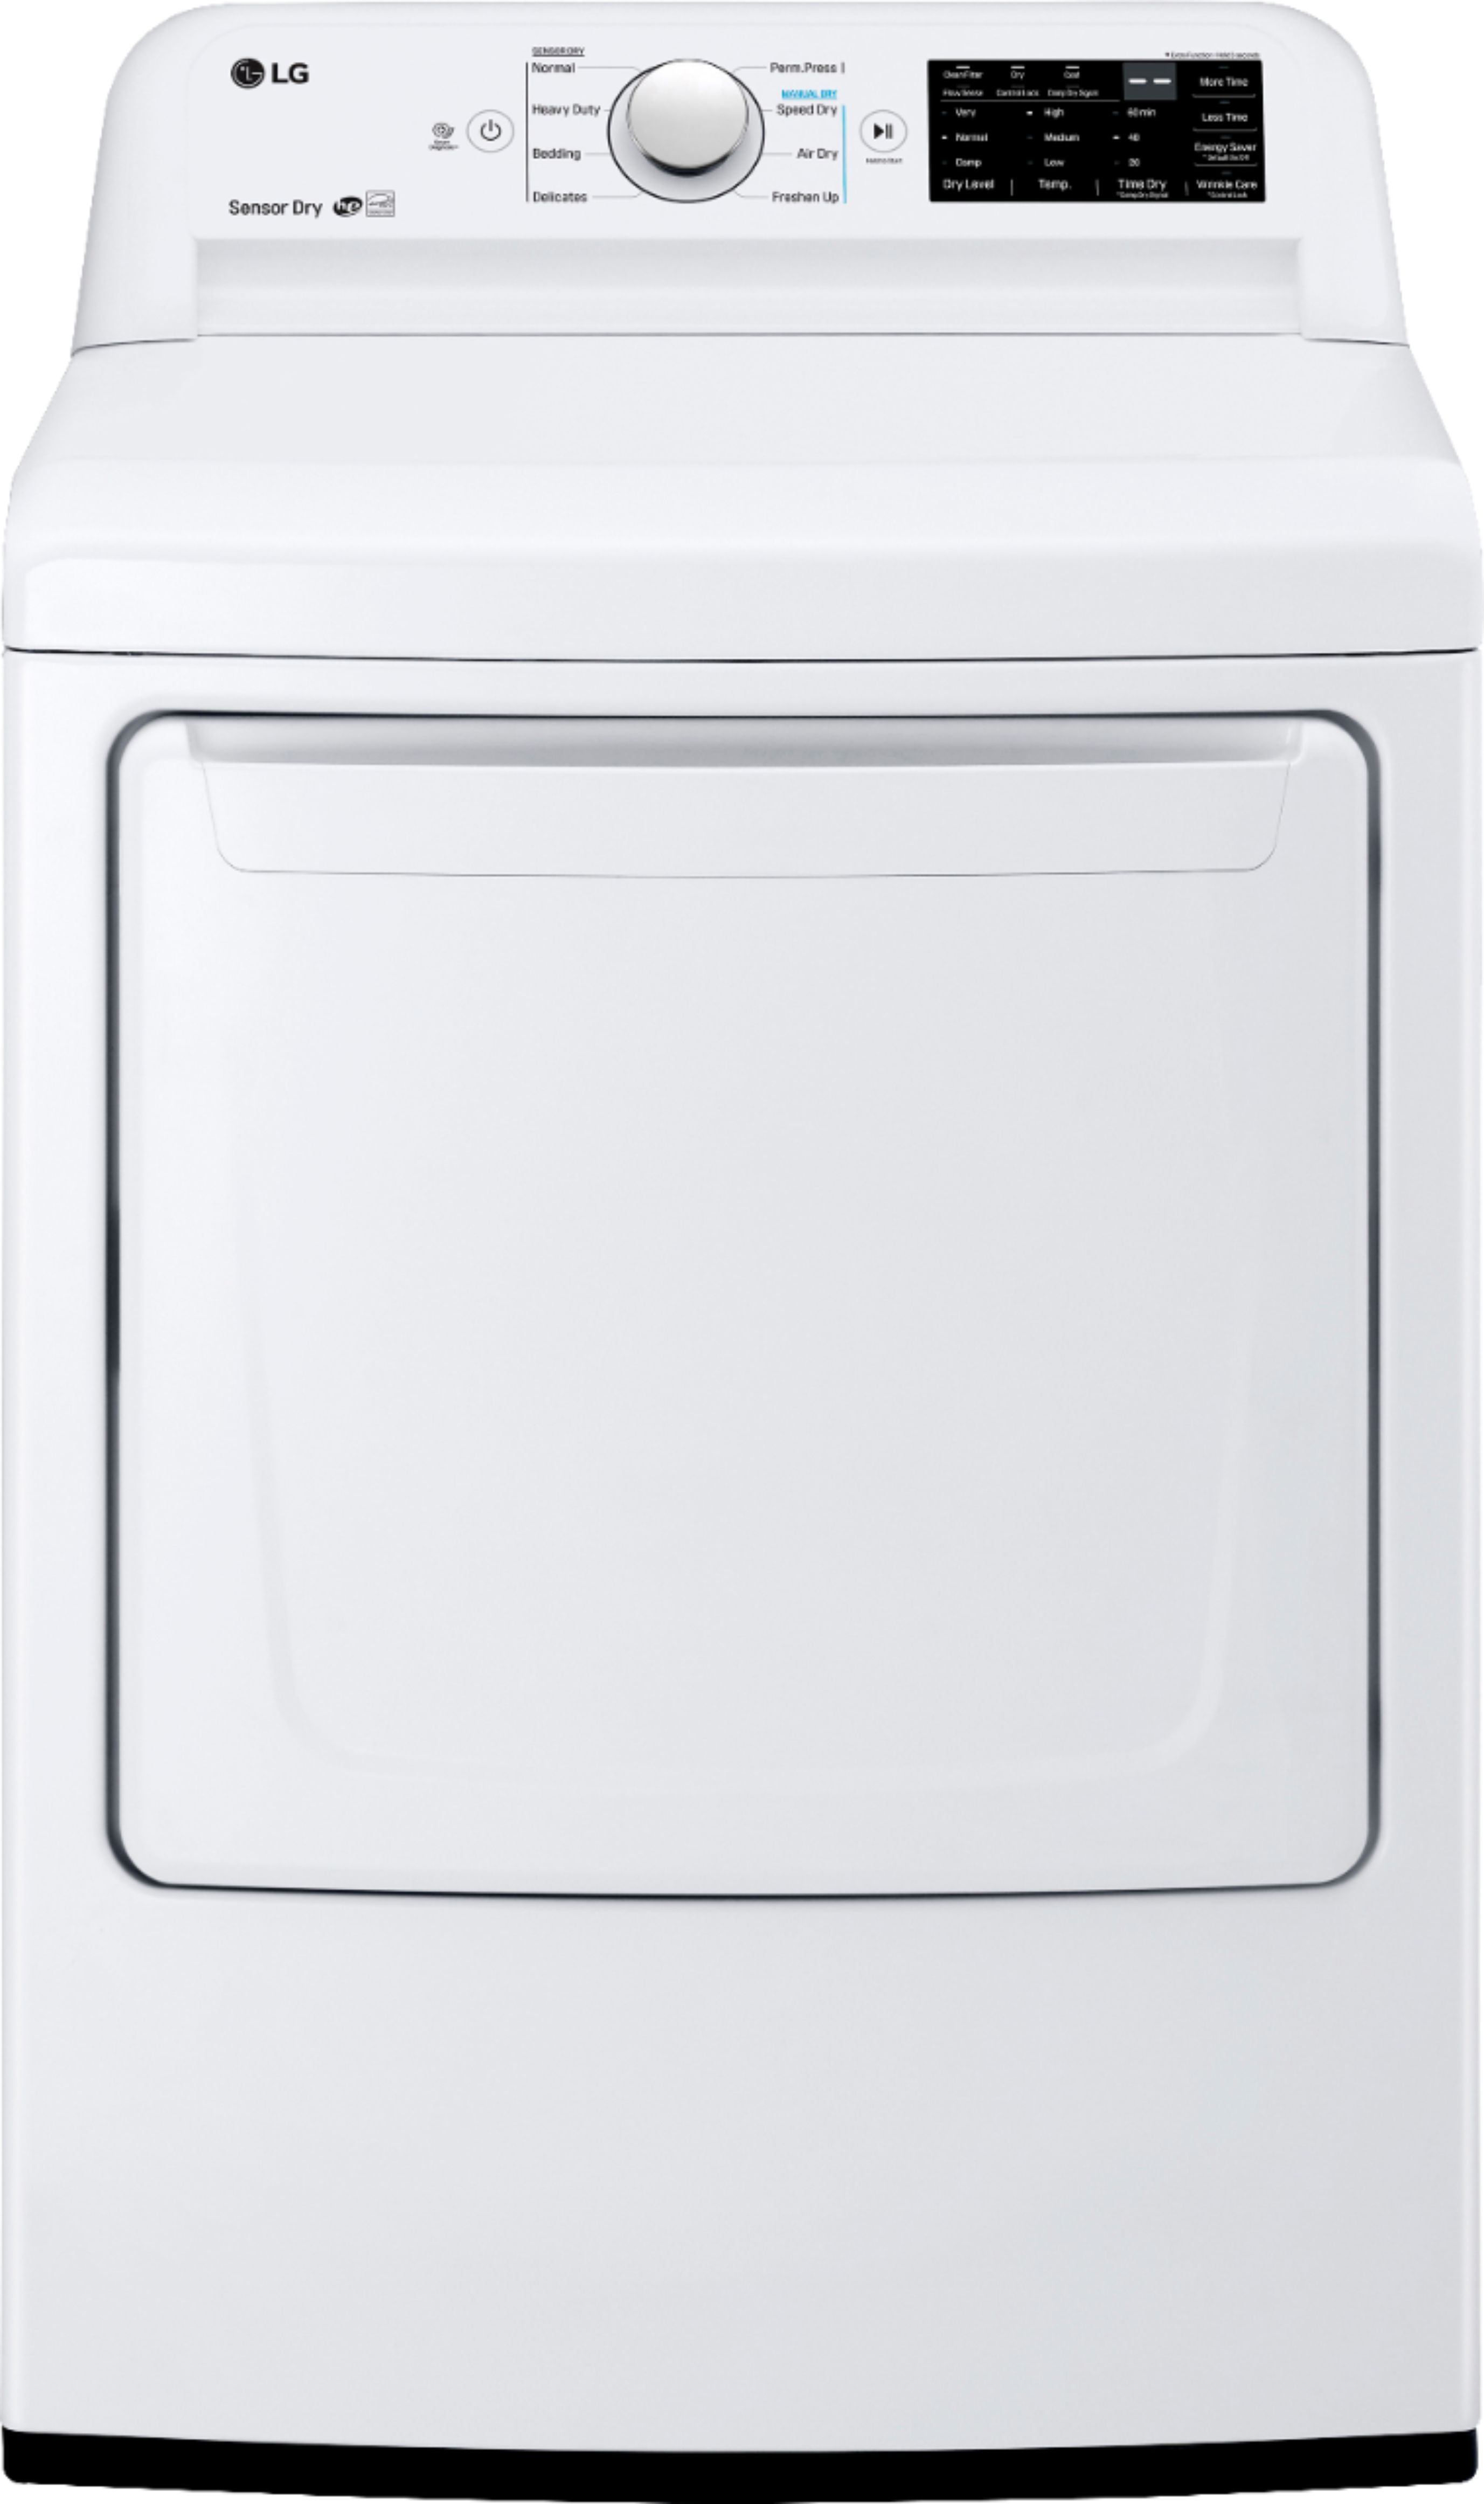 LG 7.3 Cu. Ft. Electric Dryer with Sensor Dry White DLE7100W - Best Buy | Best Buy U.S.